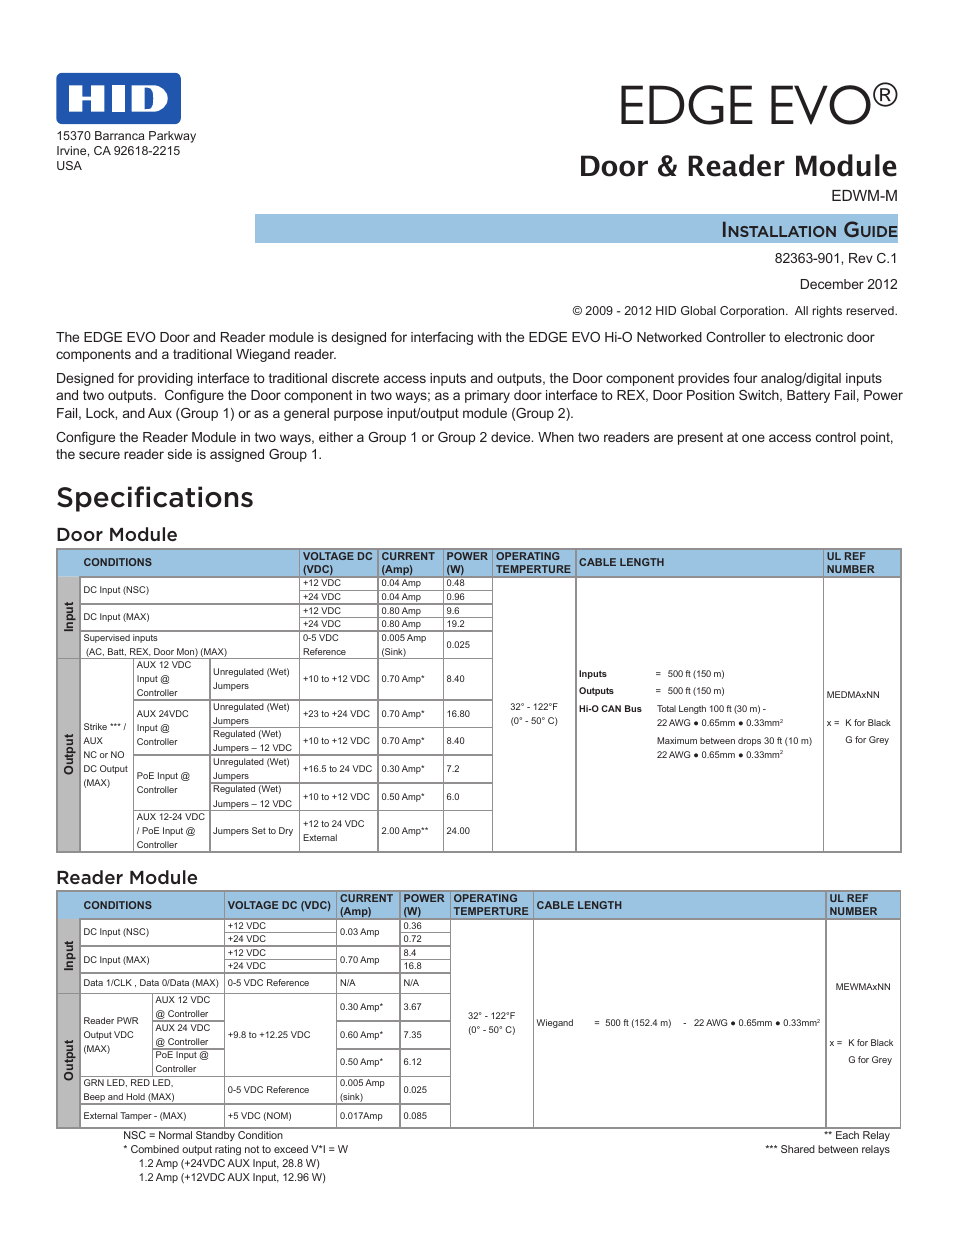 EDGE EVO EDWM-M Door-Wiegand Module Installation Guide